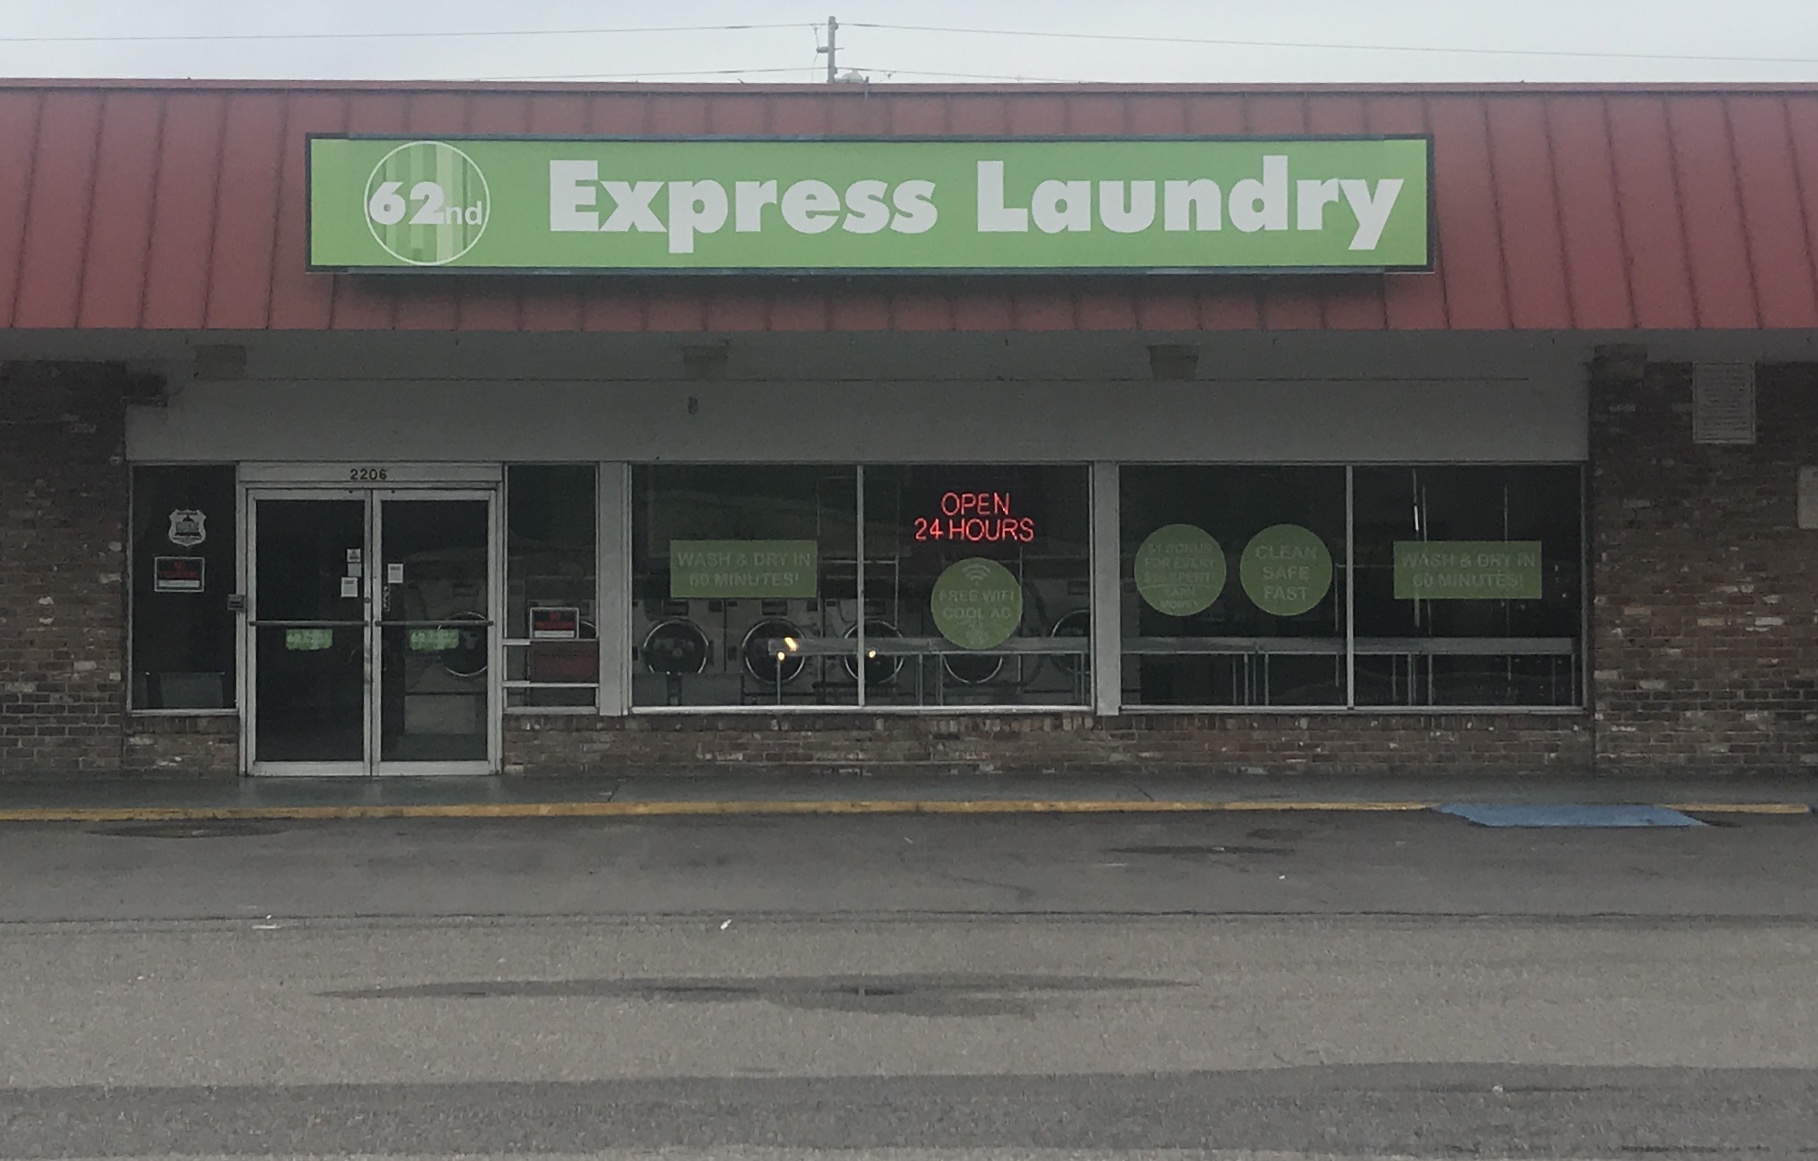 62nd Express Laundry